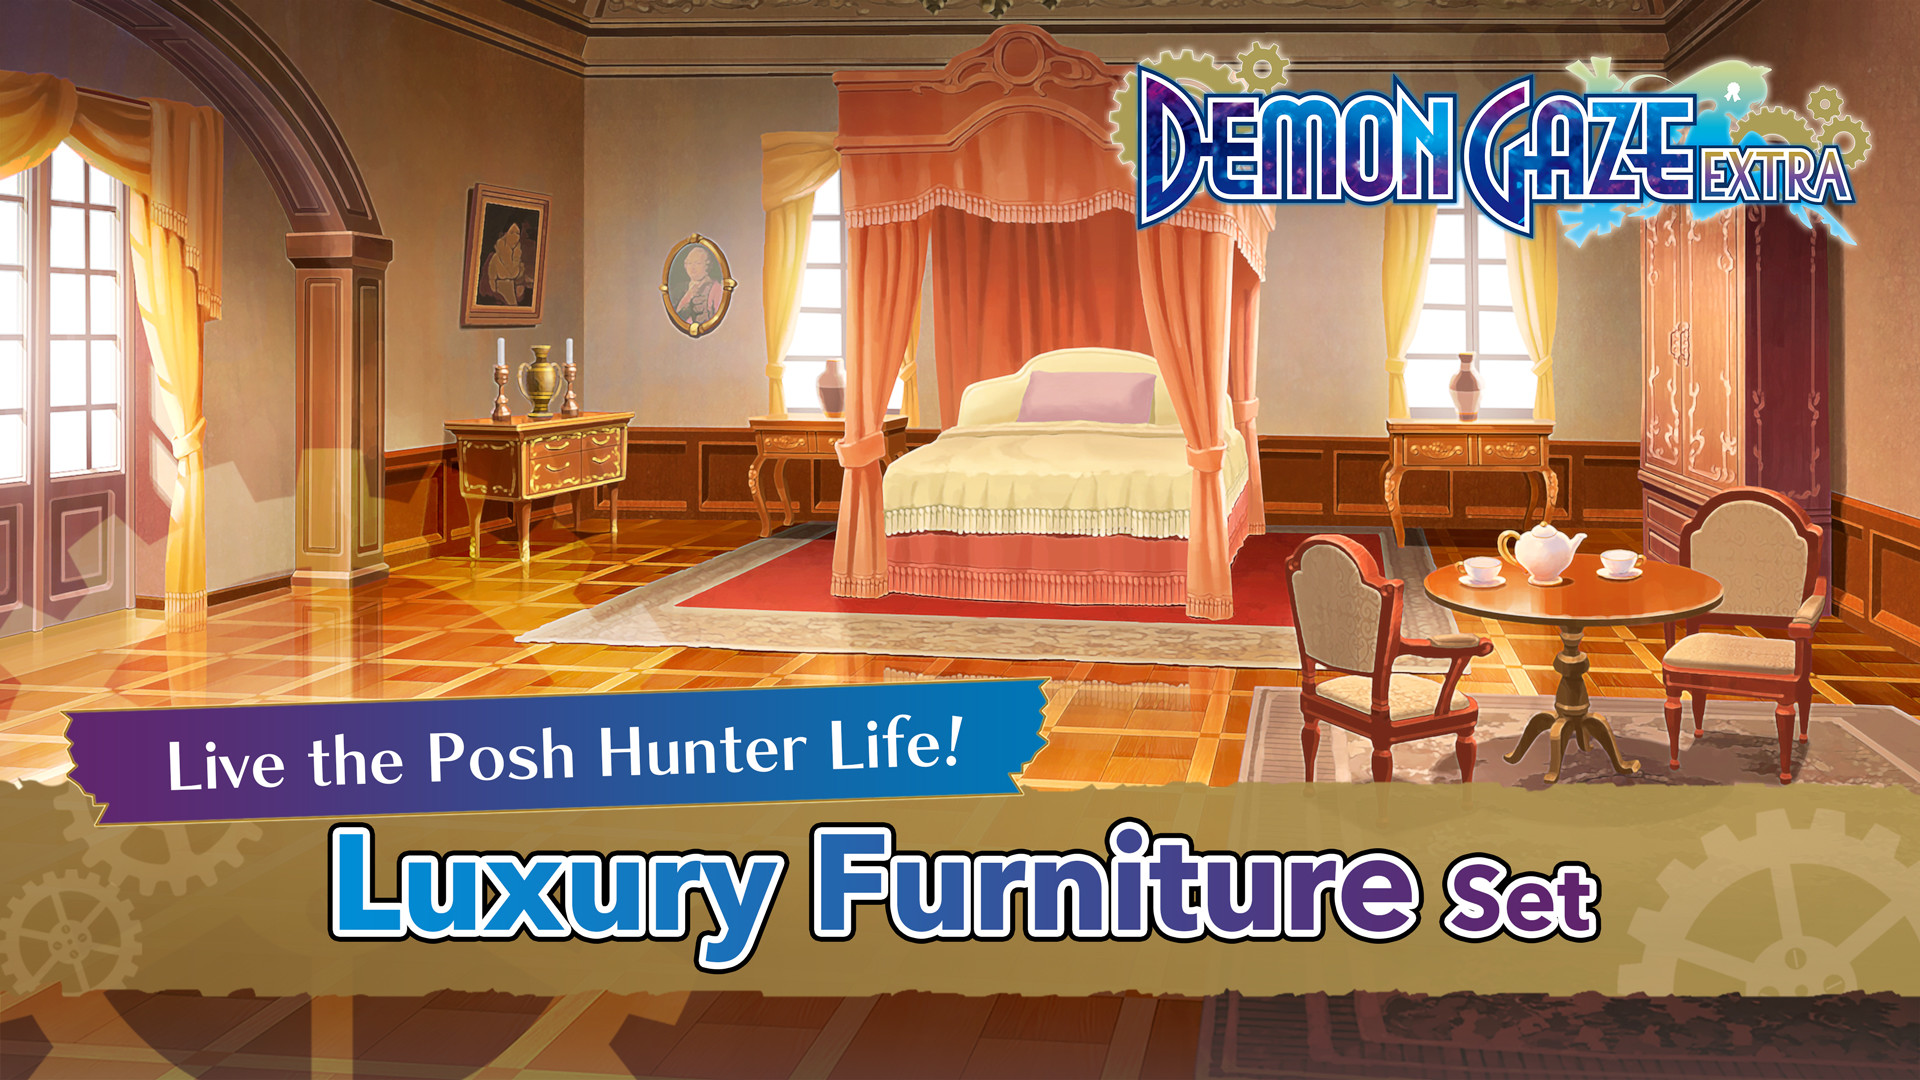 DEMON GAZE EXTRA - Live the Posh Hunter Life! Luxury Furniture Set Featured Screenshot #1